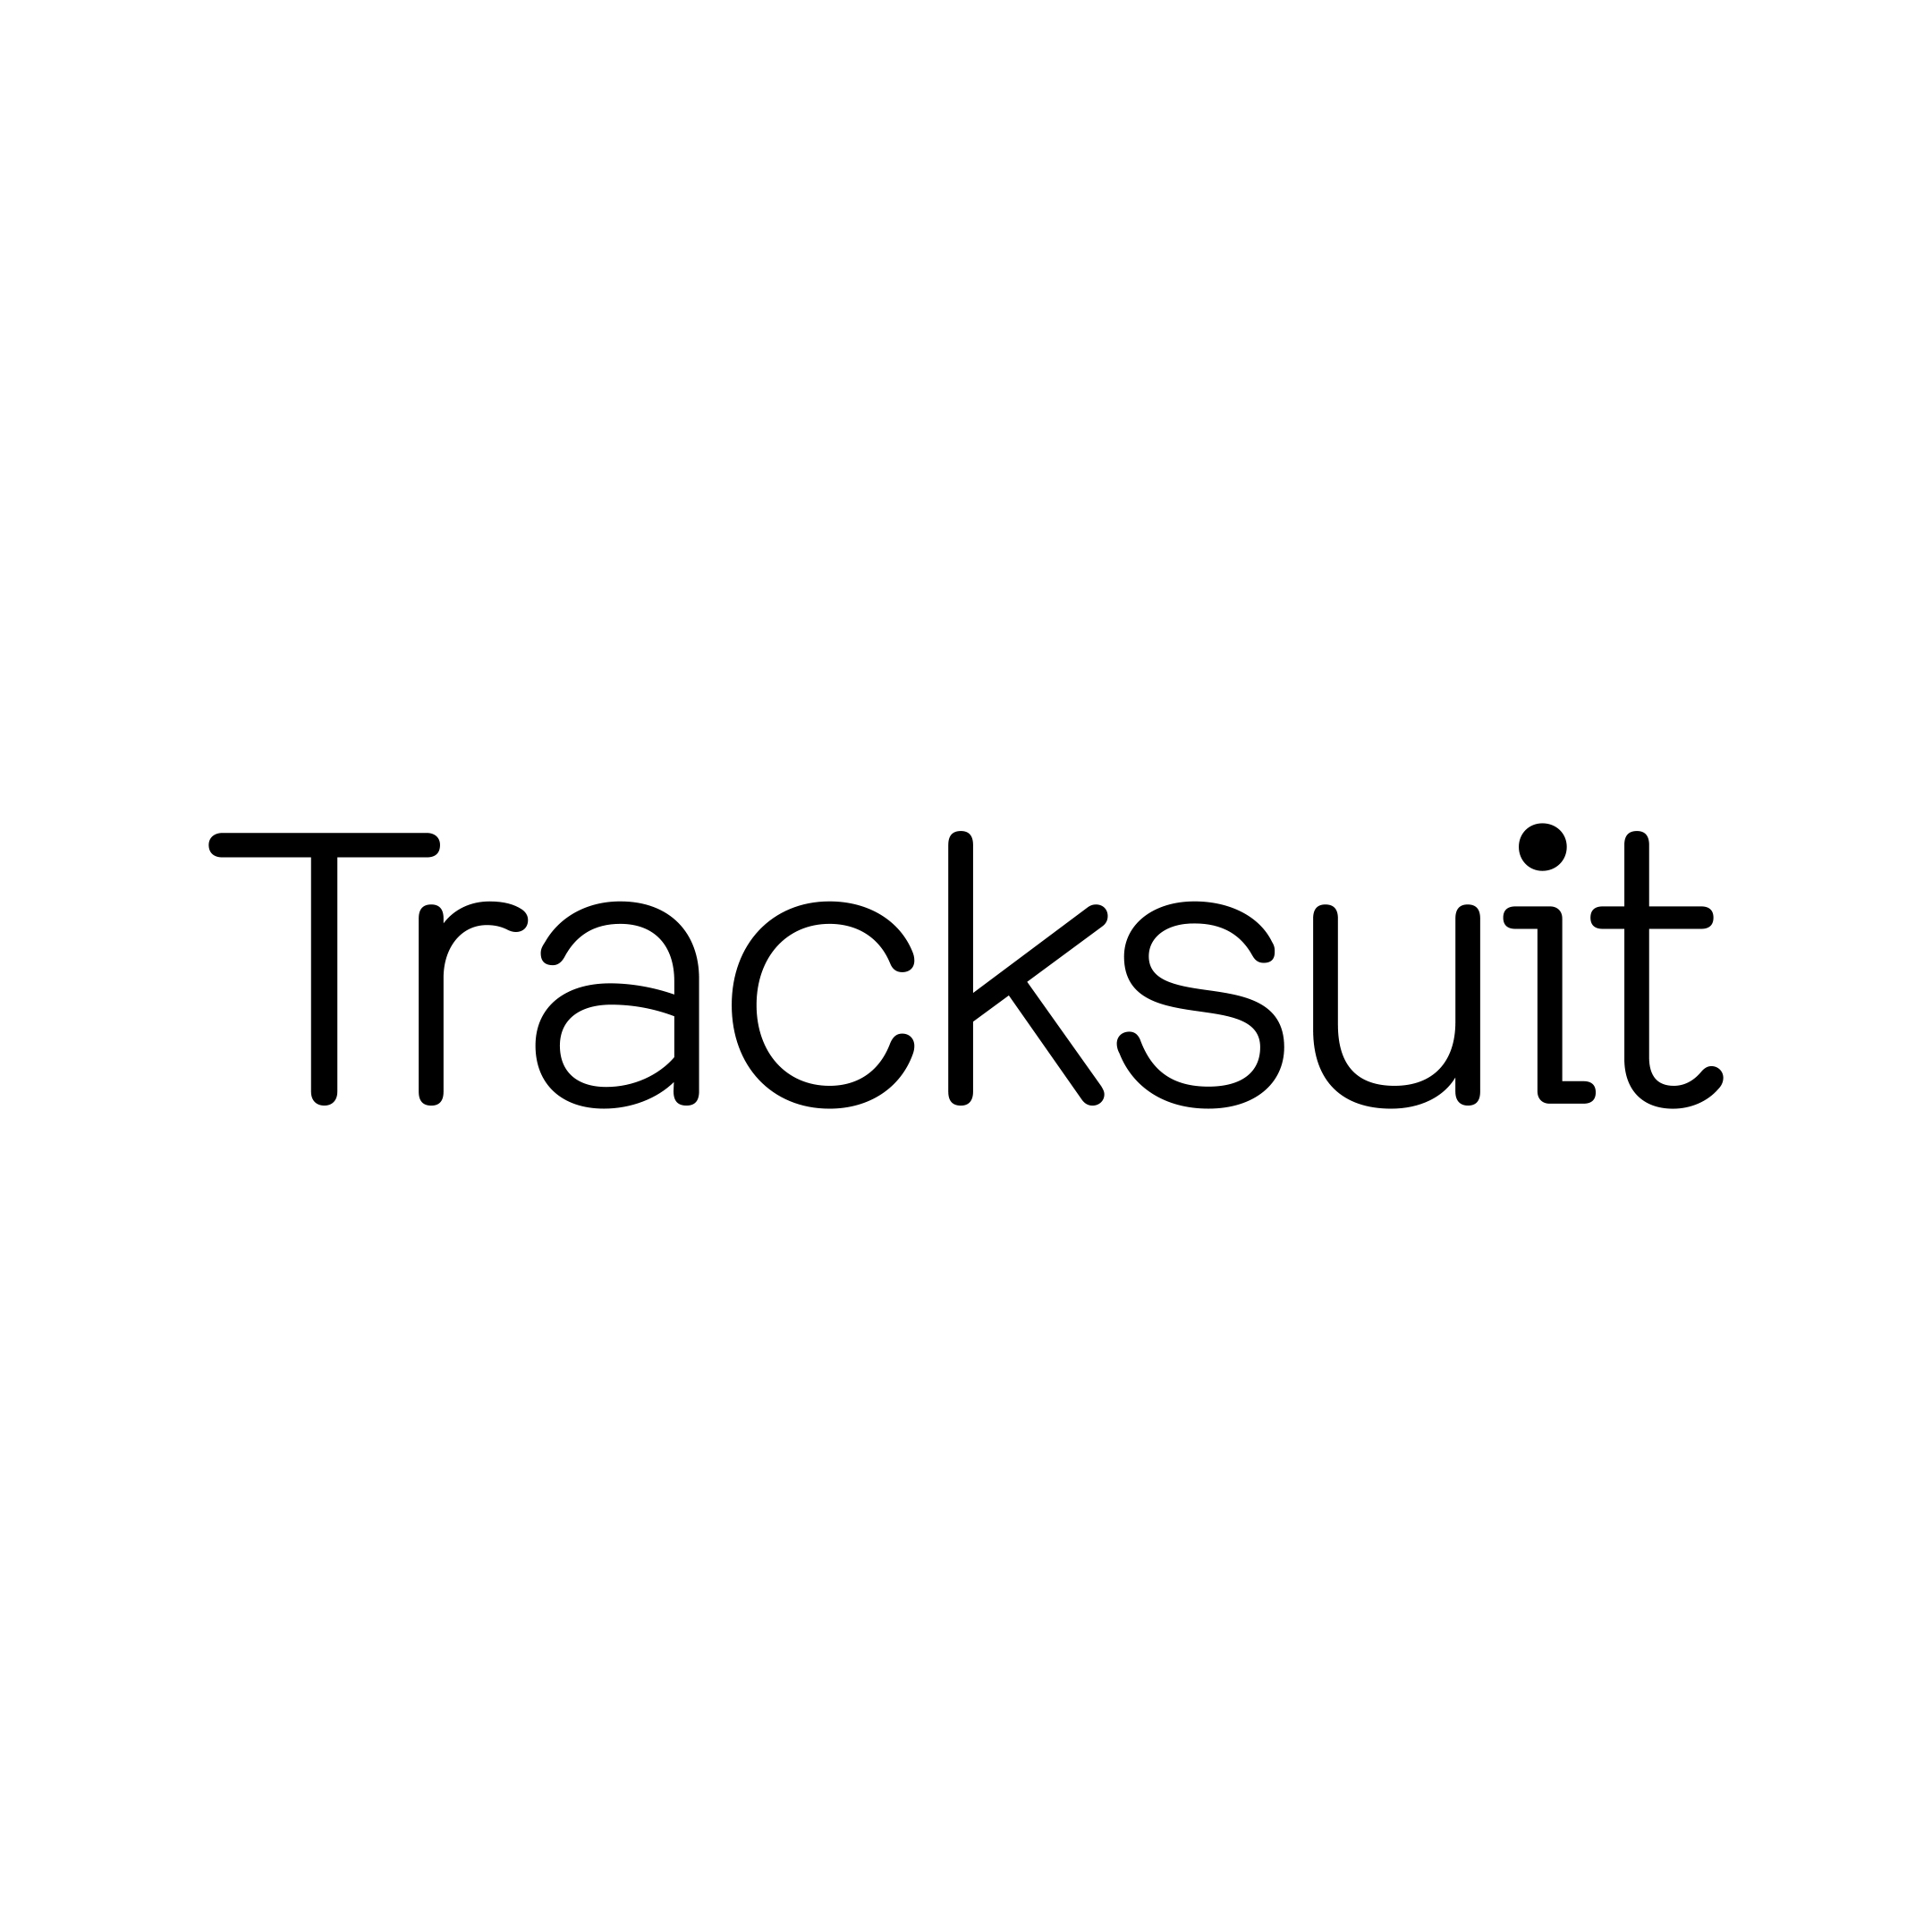 Tracksuit